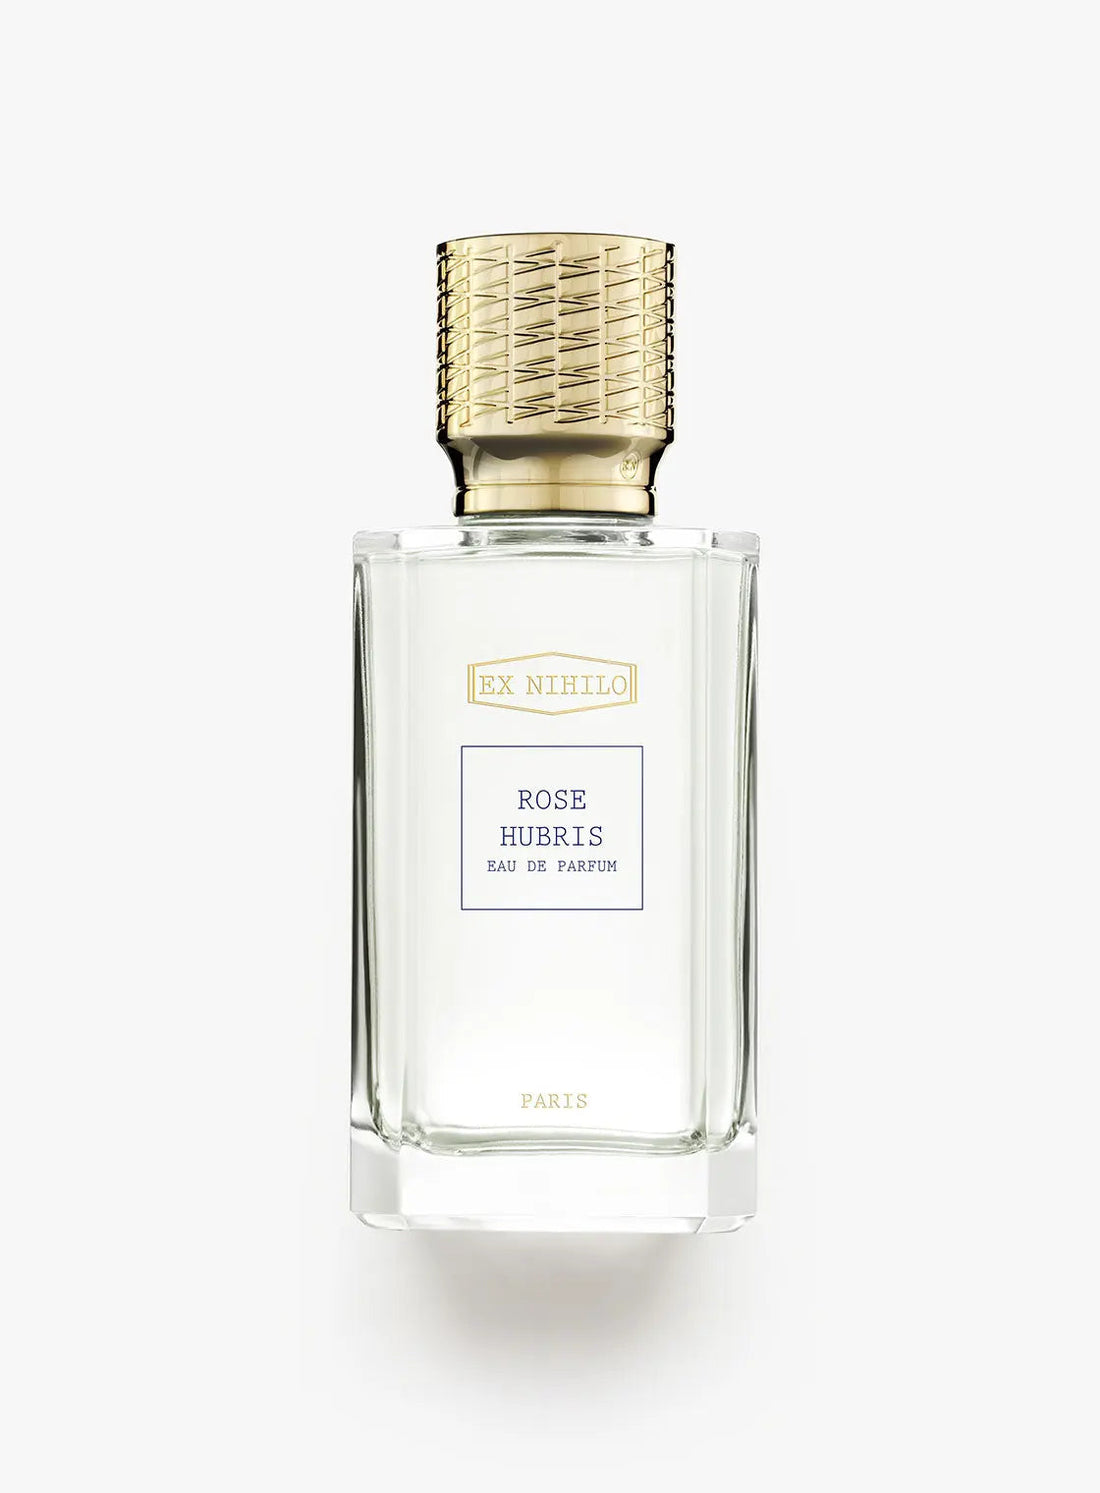 Ex nihilo Rose Hubris eau de parfum - 50 ml